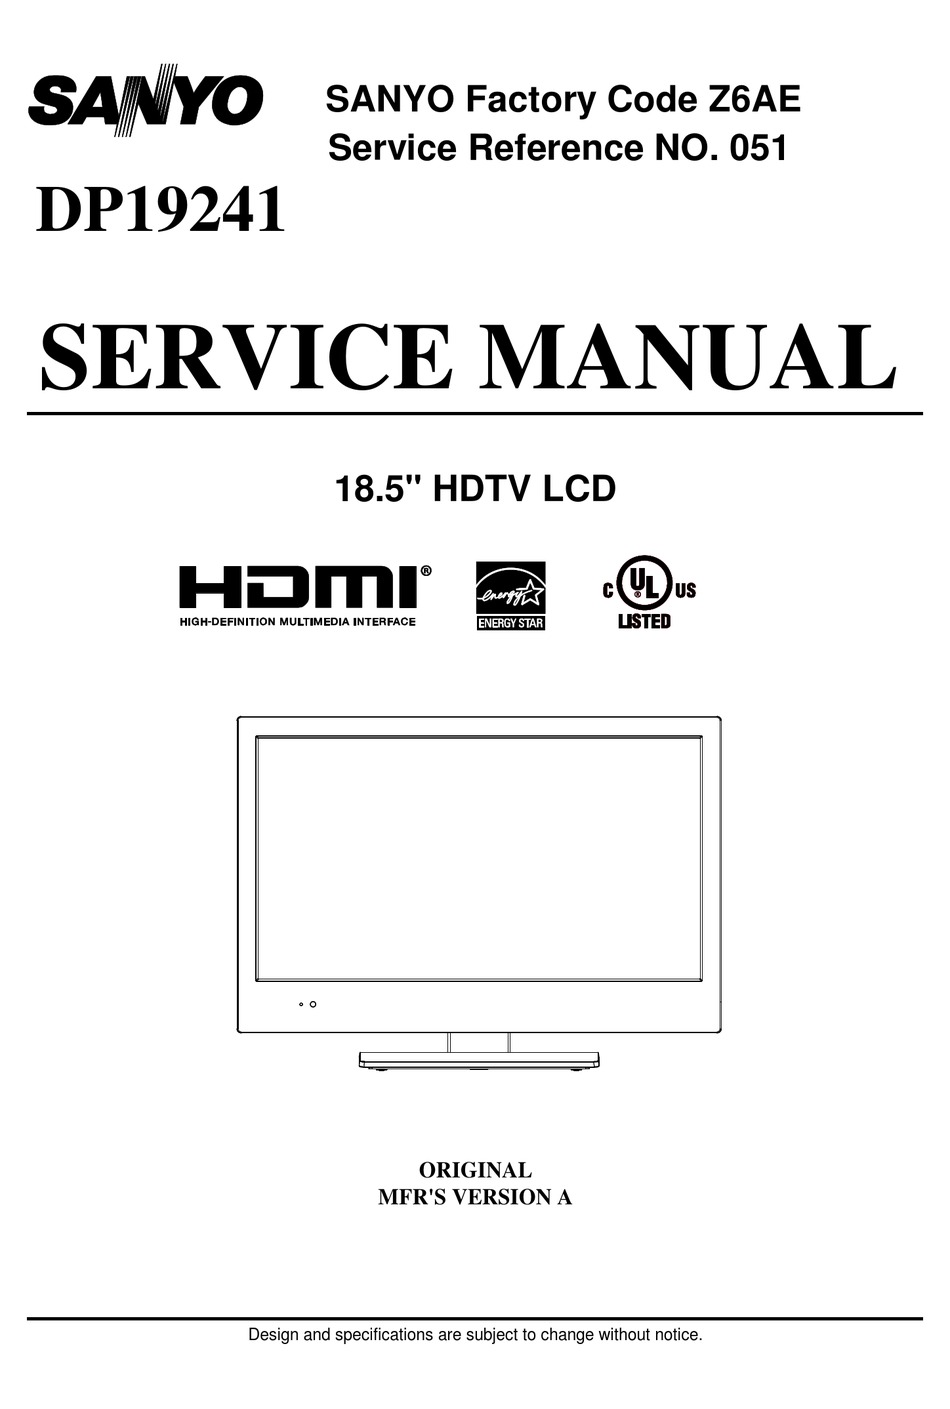 SANYO DP19241 SERVICE MANUAL Pdf Download | ManualsLib